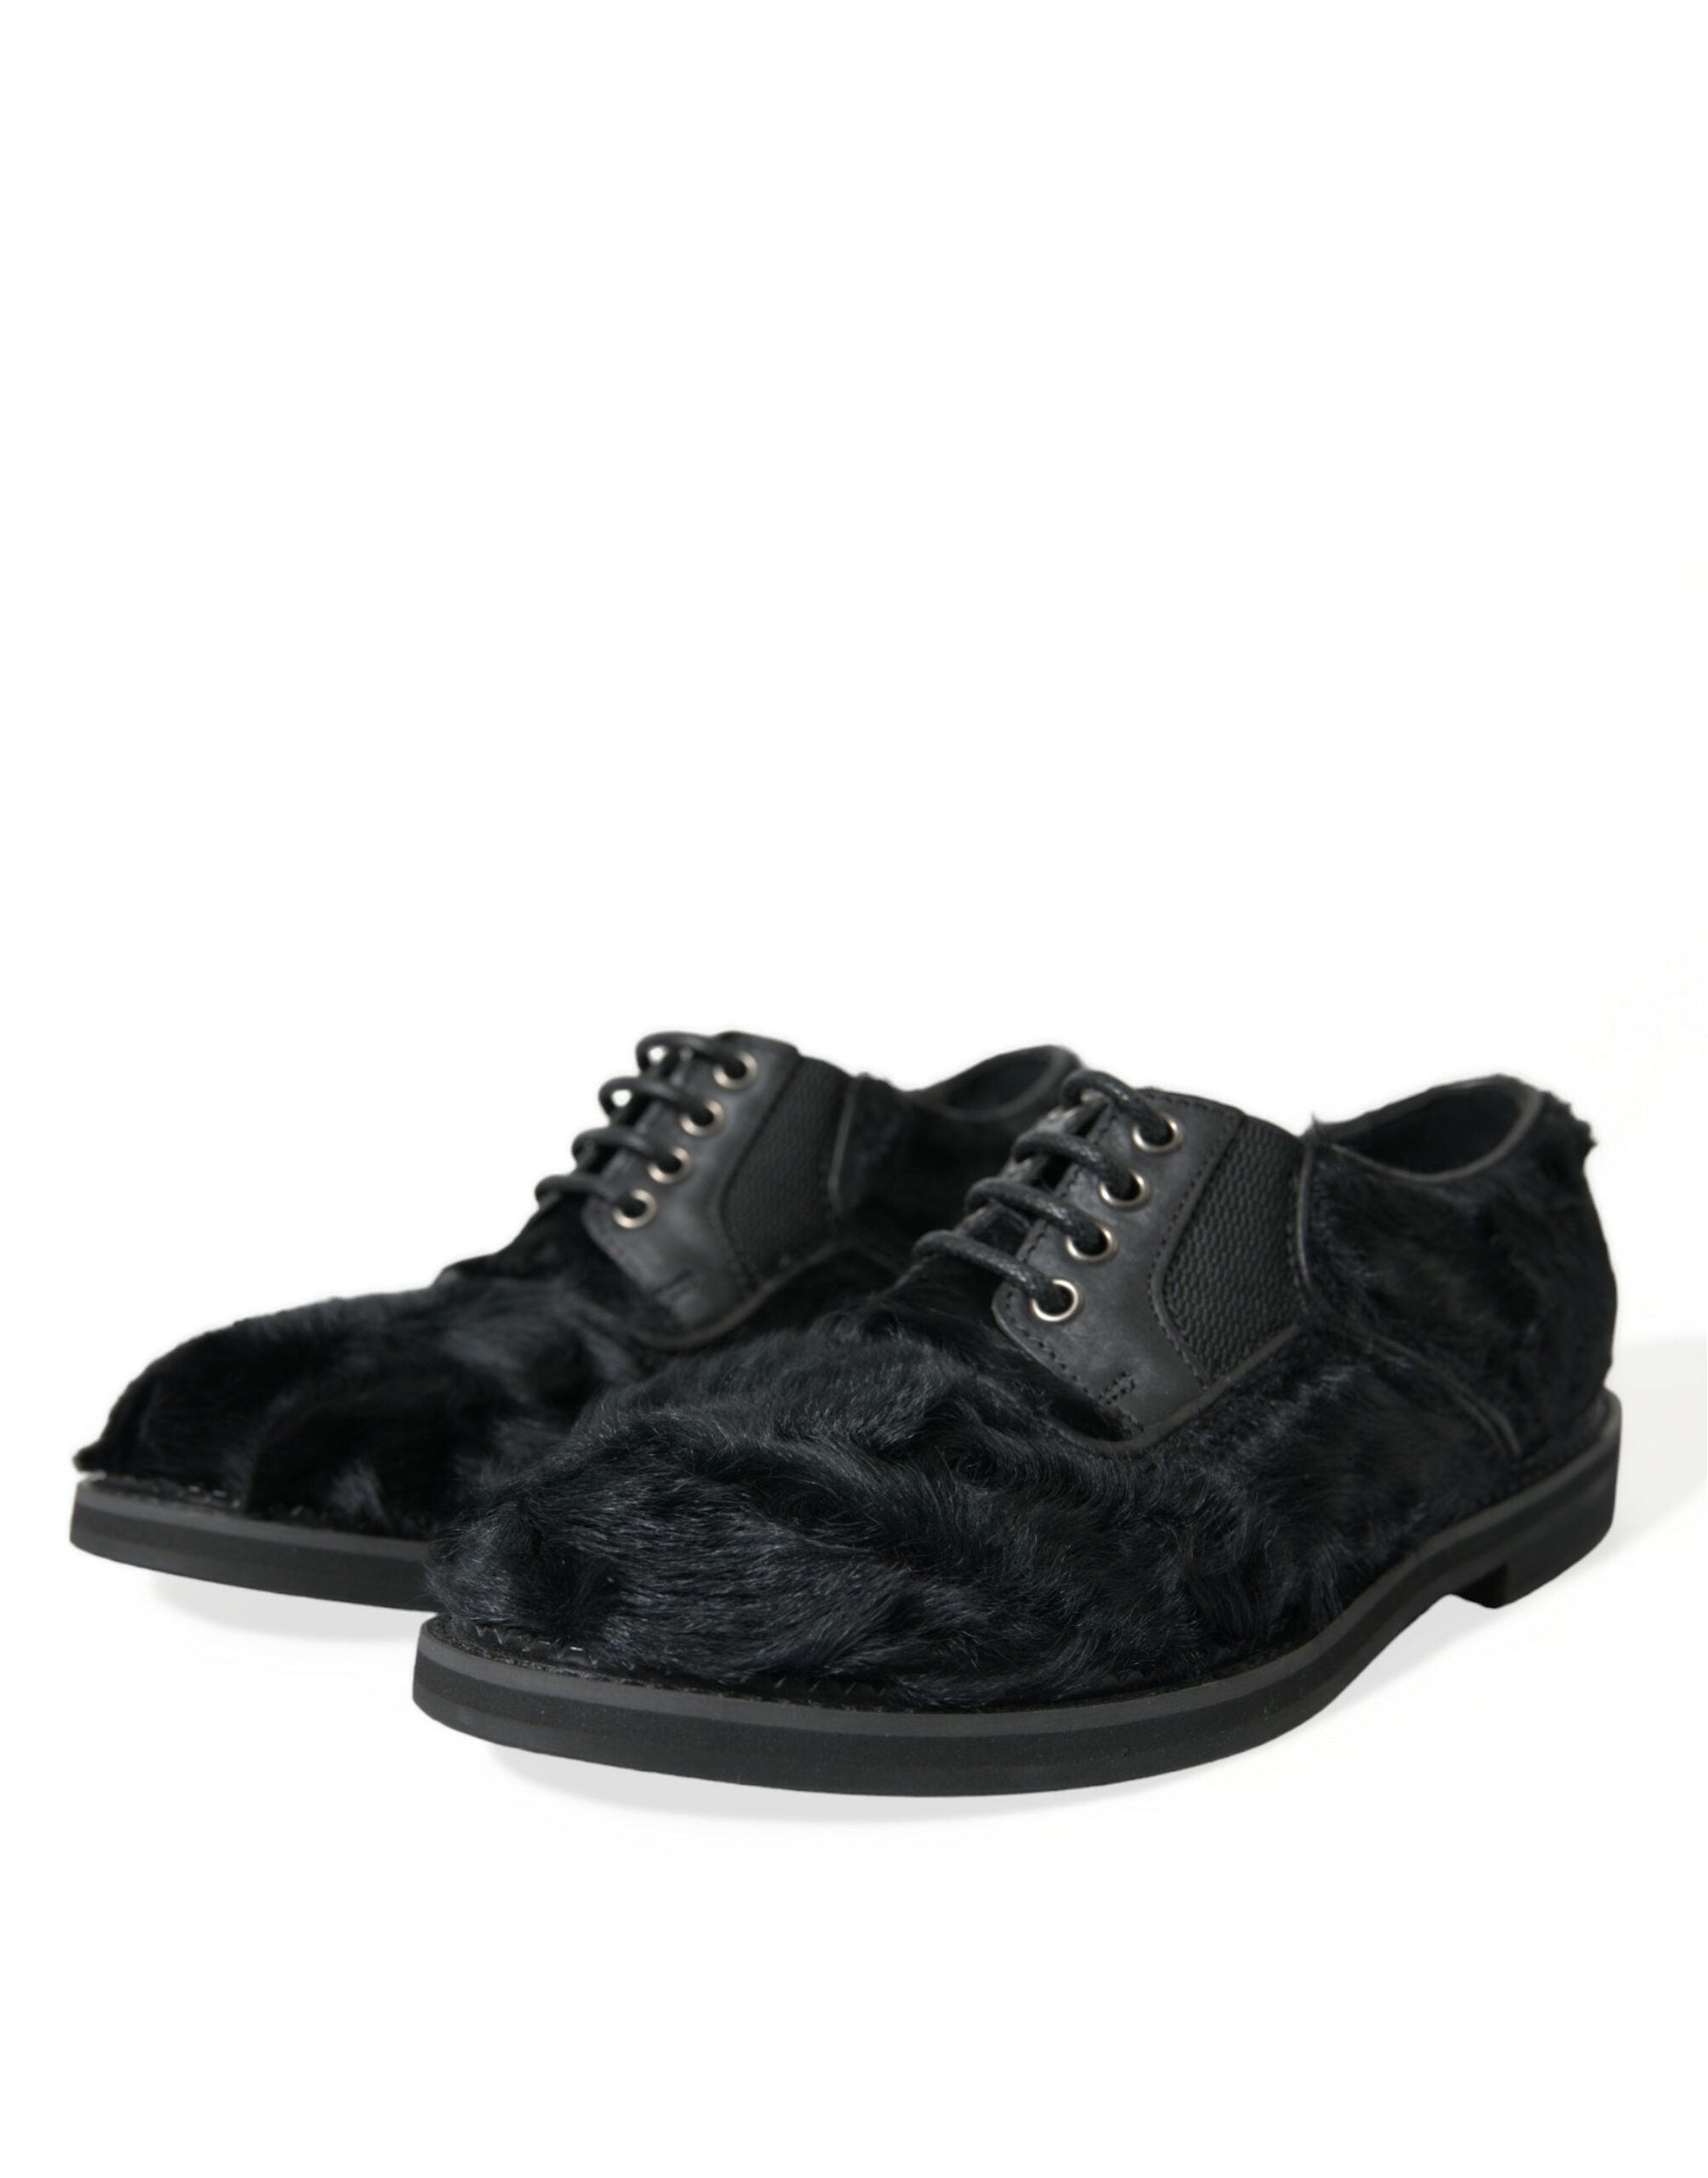 Fashionsarah.com Fashionsarah.com Dolce & Gabbana Black Fur Leather Lace Up Derby Dress Shoes